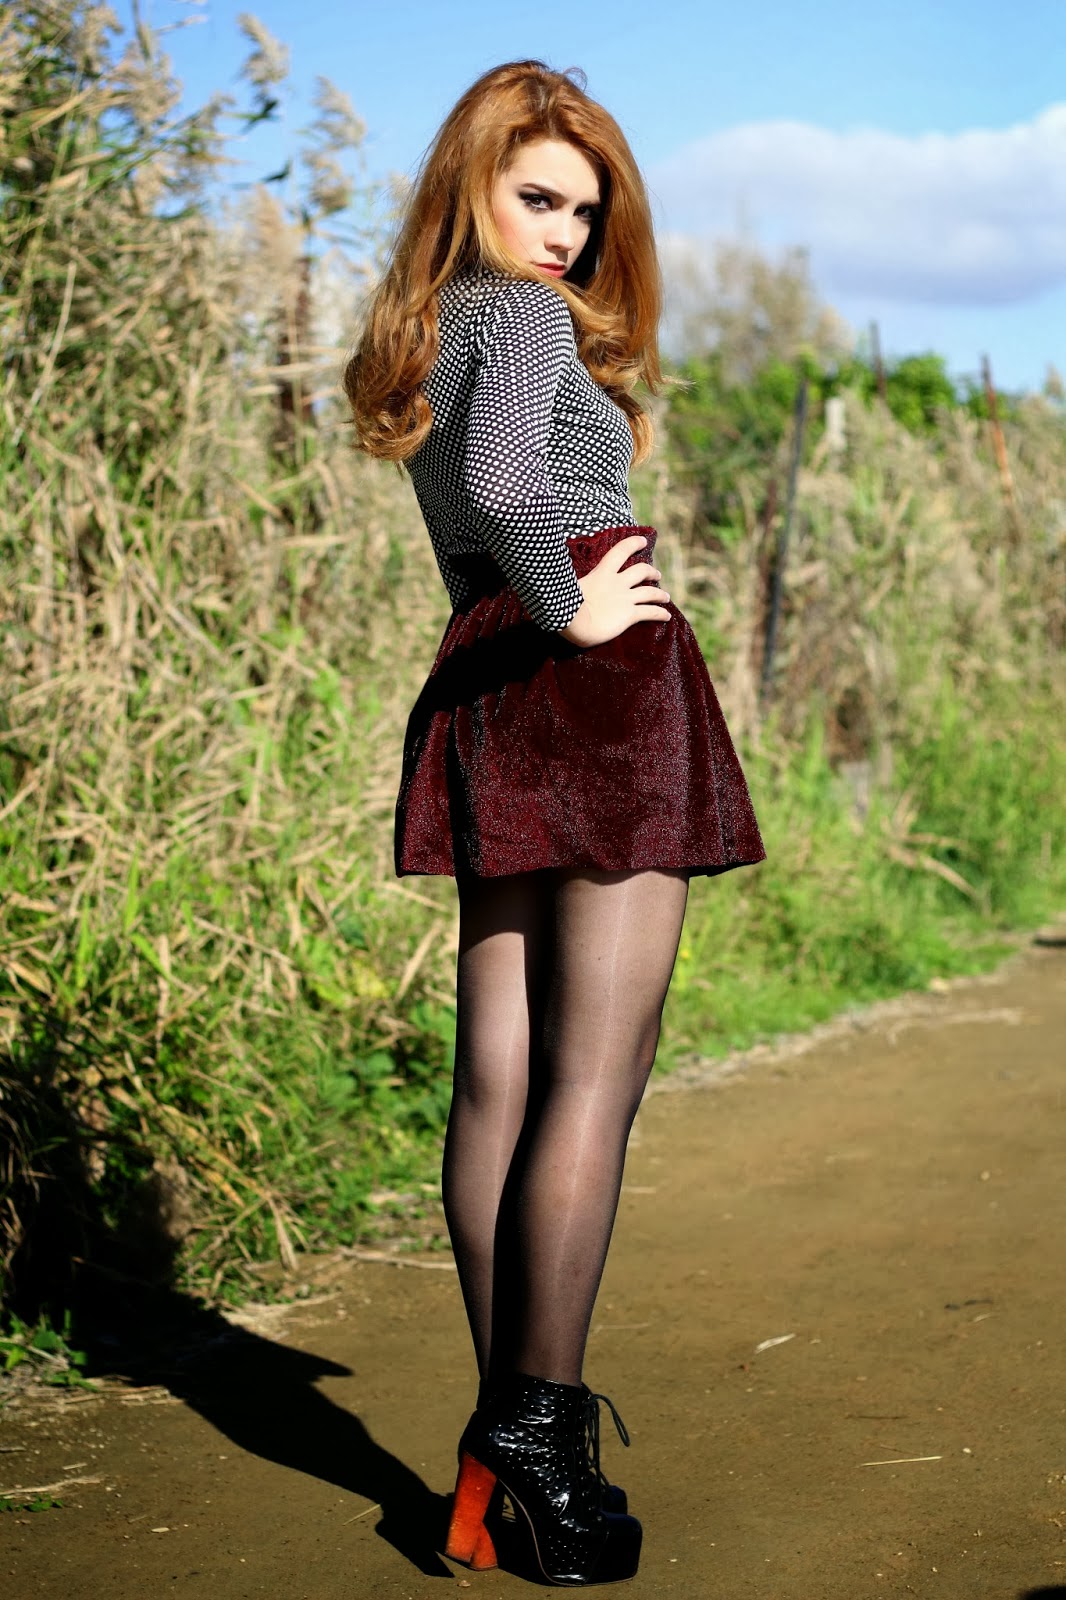 Redhead high heels black stockings